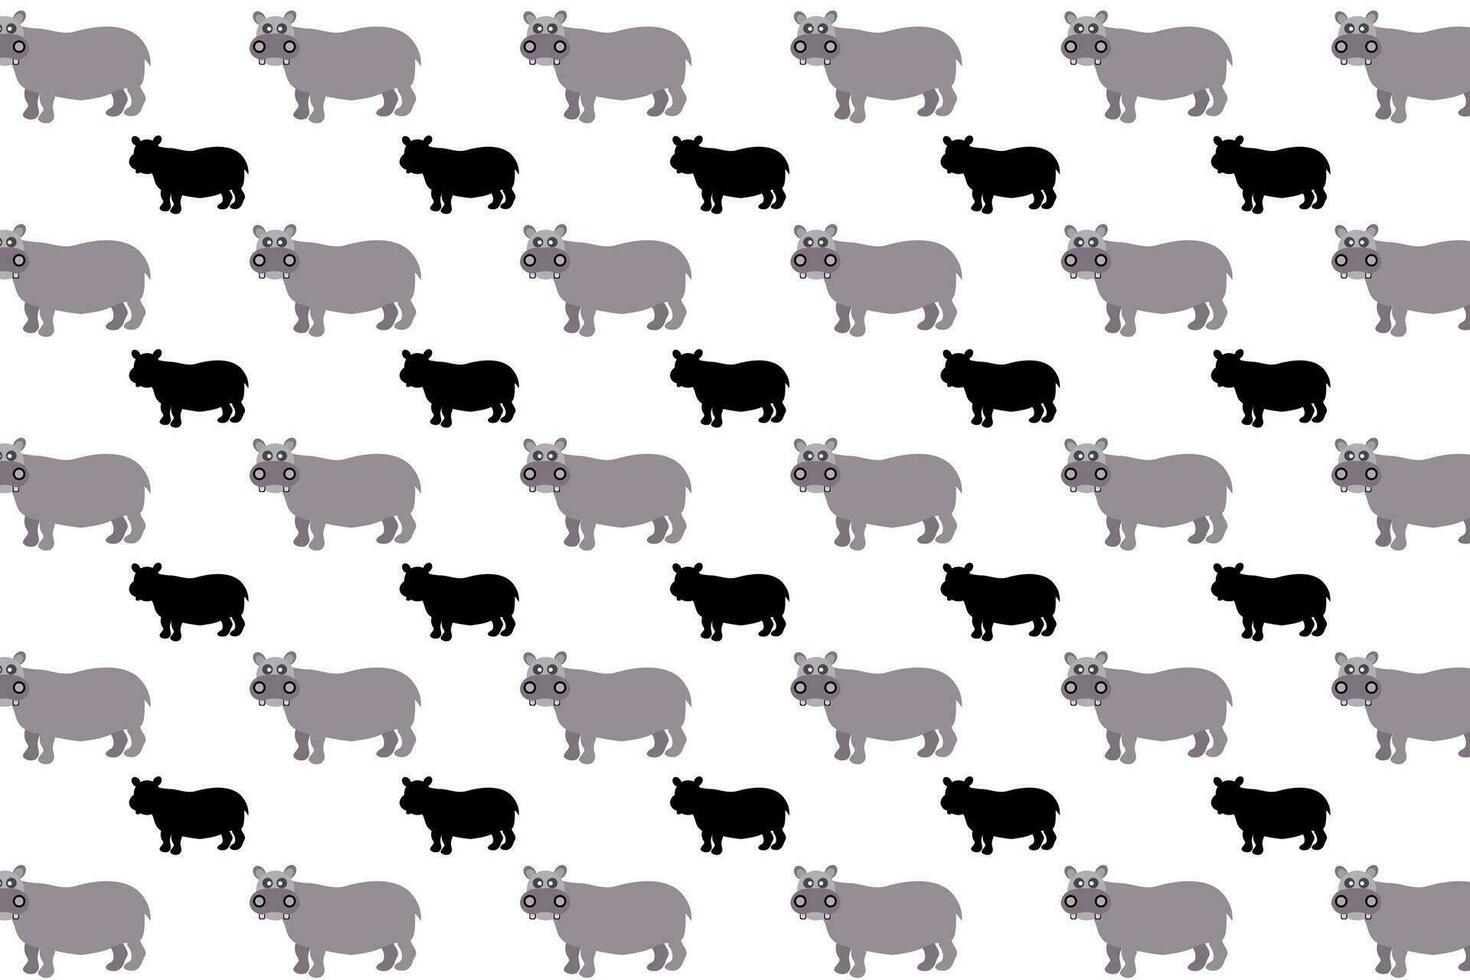 Flat Hippo Animal Pattern Background vector